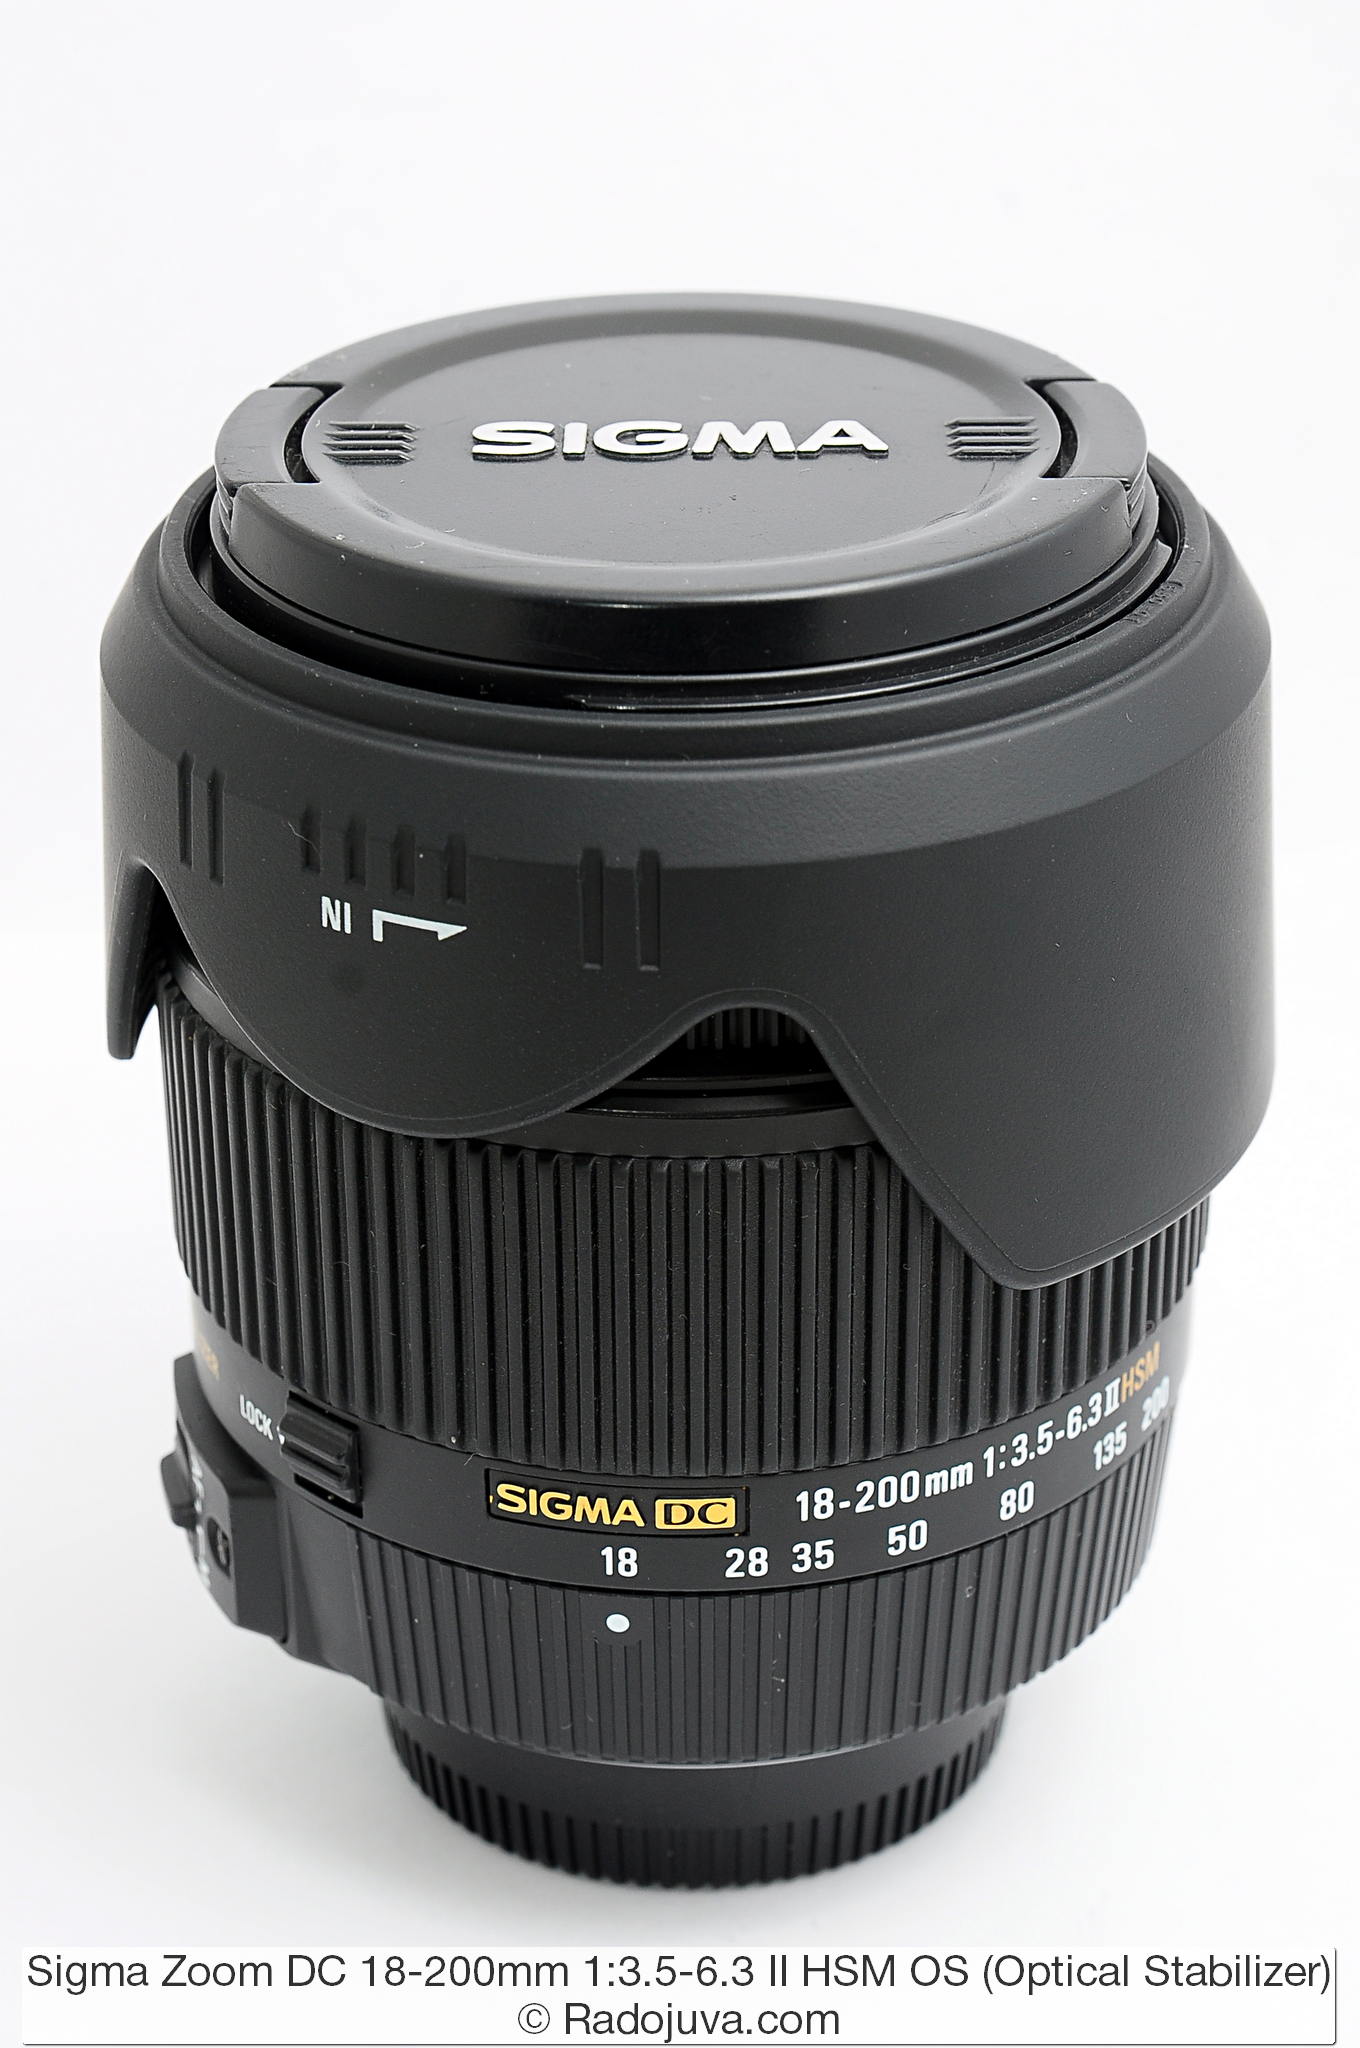 Sigma Zoom DC 18-200mm 1:3.5-6.3 II HSM OS